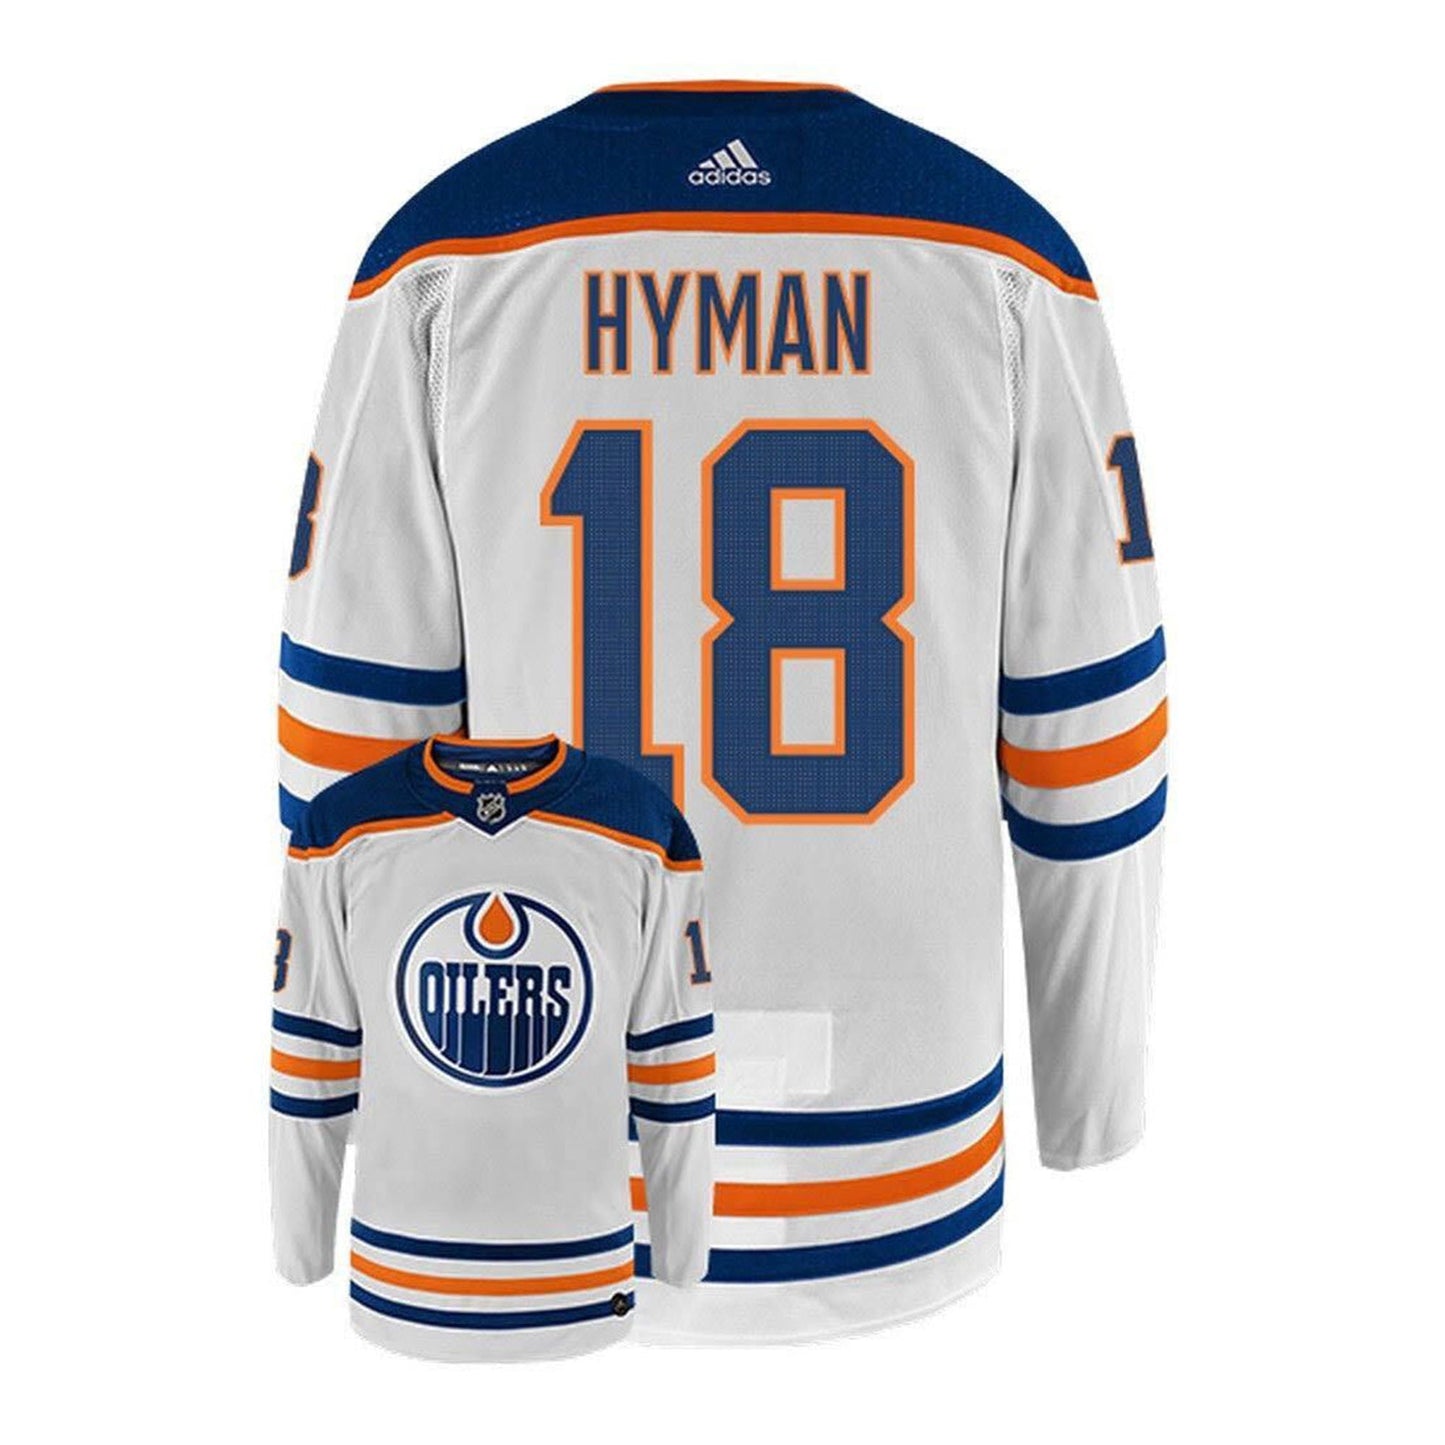 NHL Zach Hyman Edmonton Oilers 18 Jersey